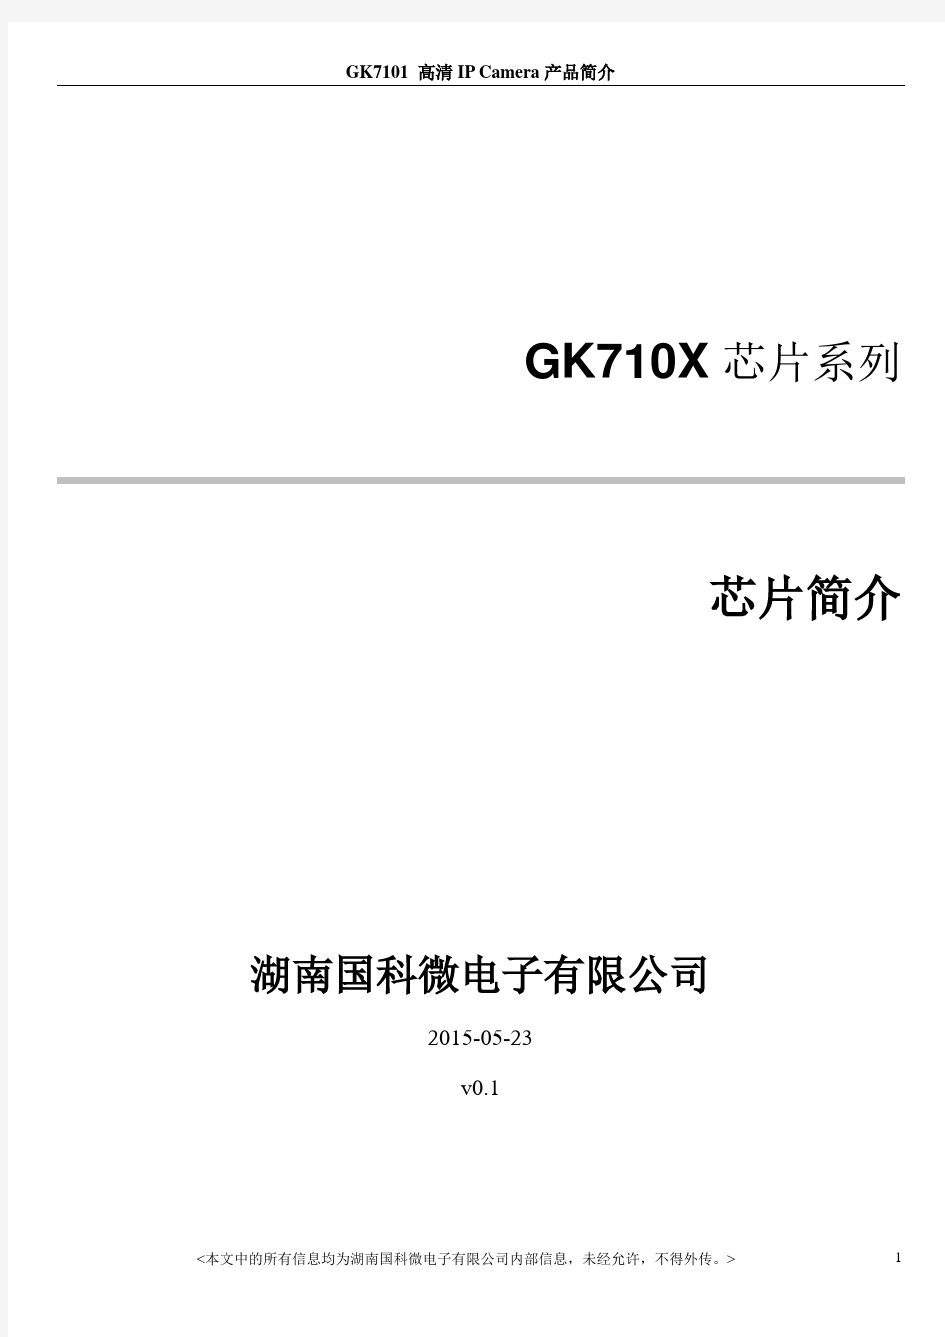 GK7101高清IP Camera产品简介